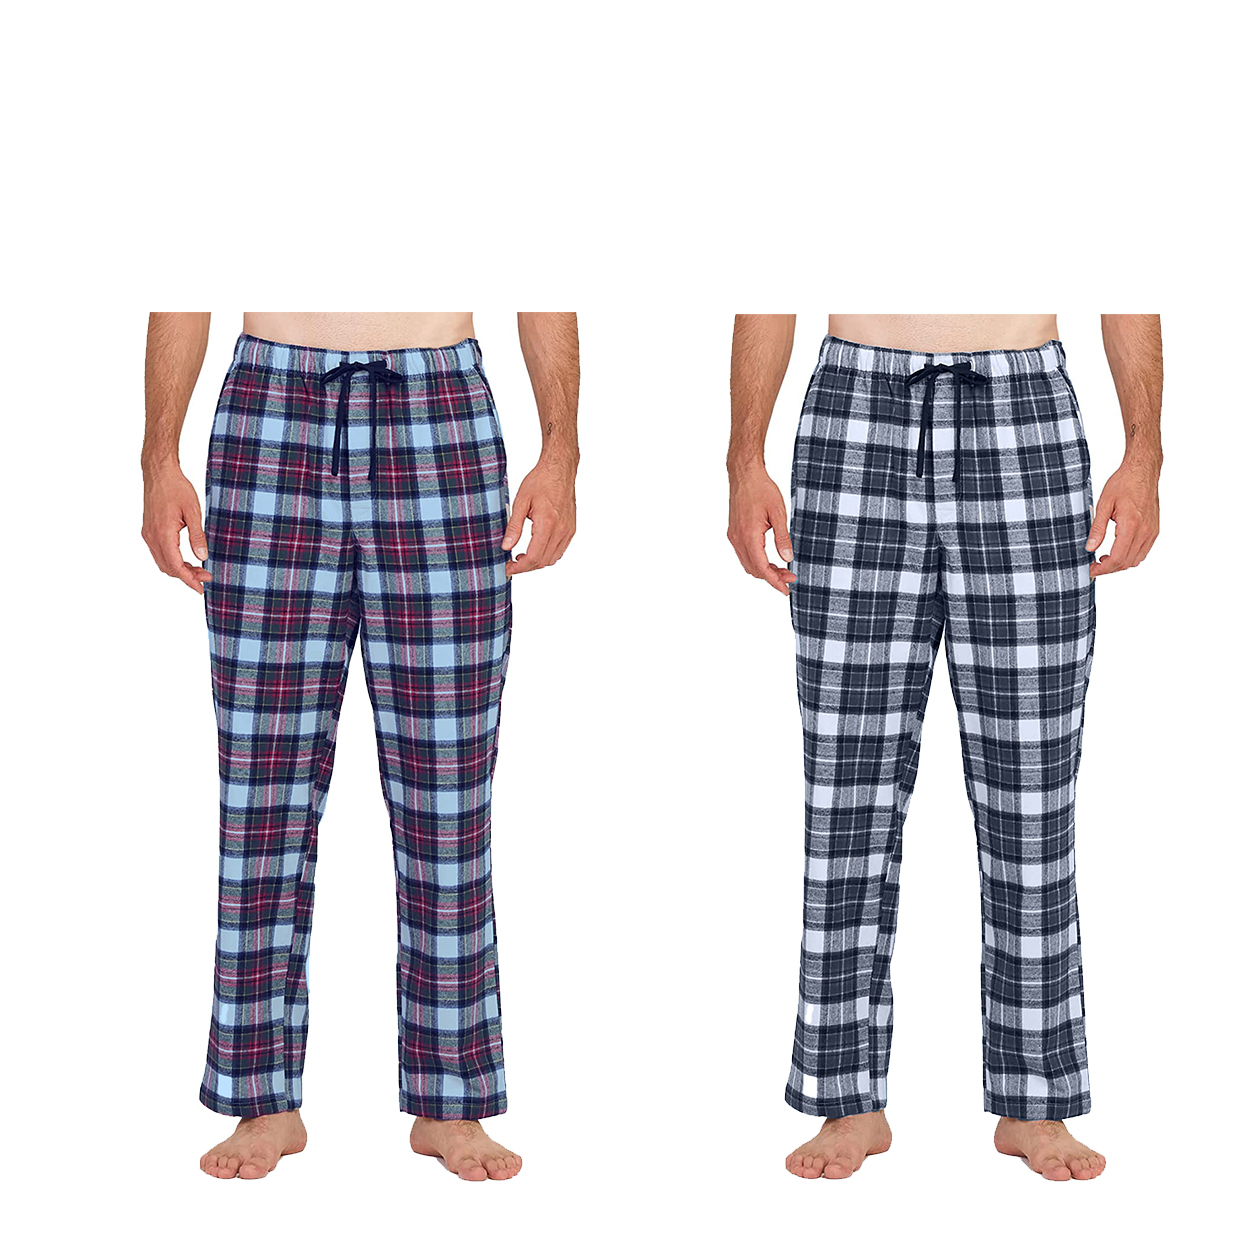 Bargain Hunters 2-Pack: Mens Soft 100% Cotton Flannel Plaid Lounge Pajama Sleep Pants